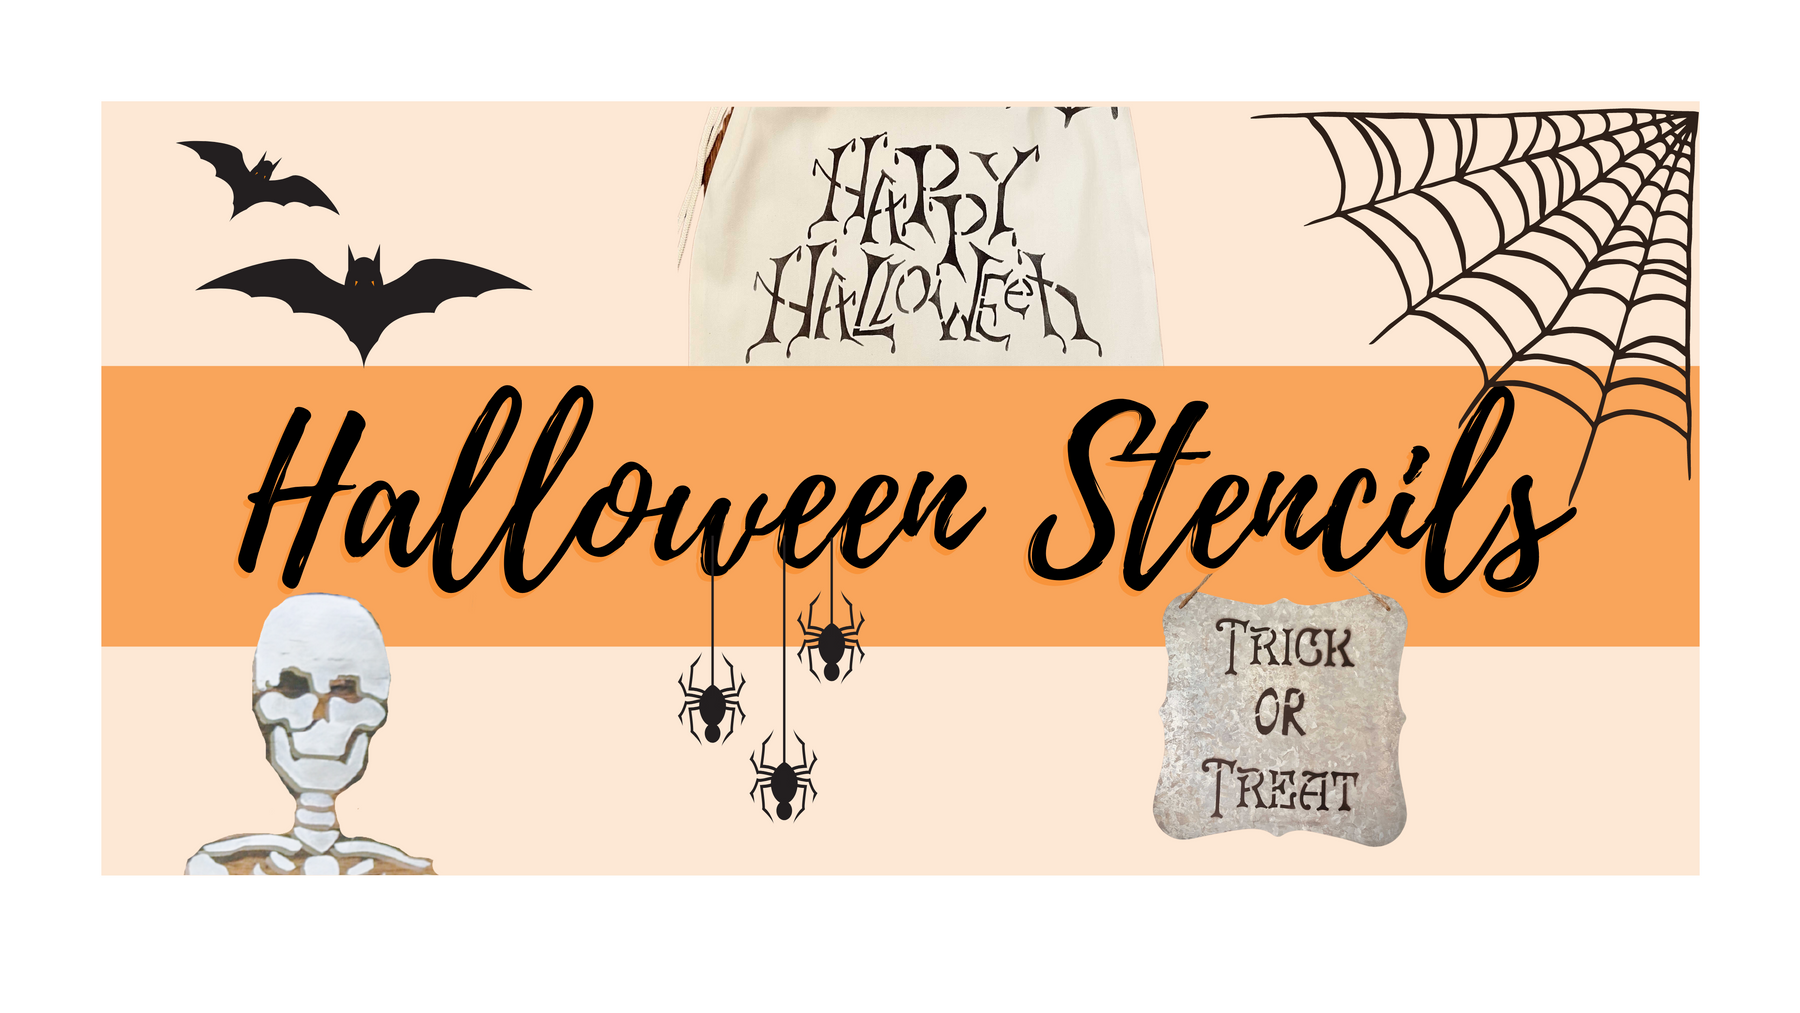 Introducing Our Spooky Season Stencils